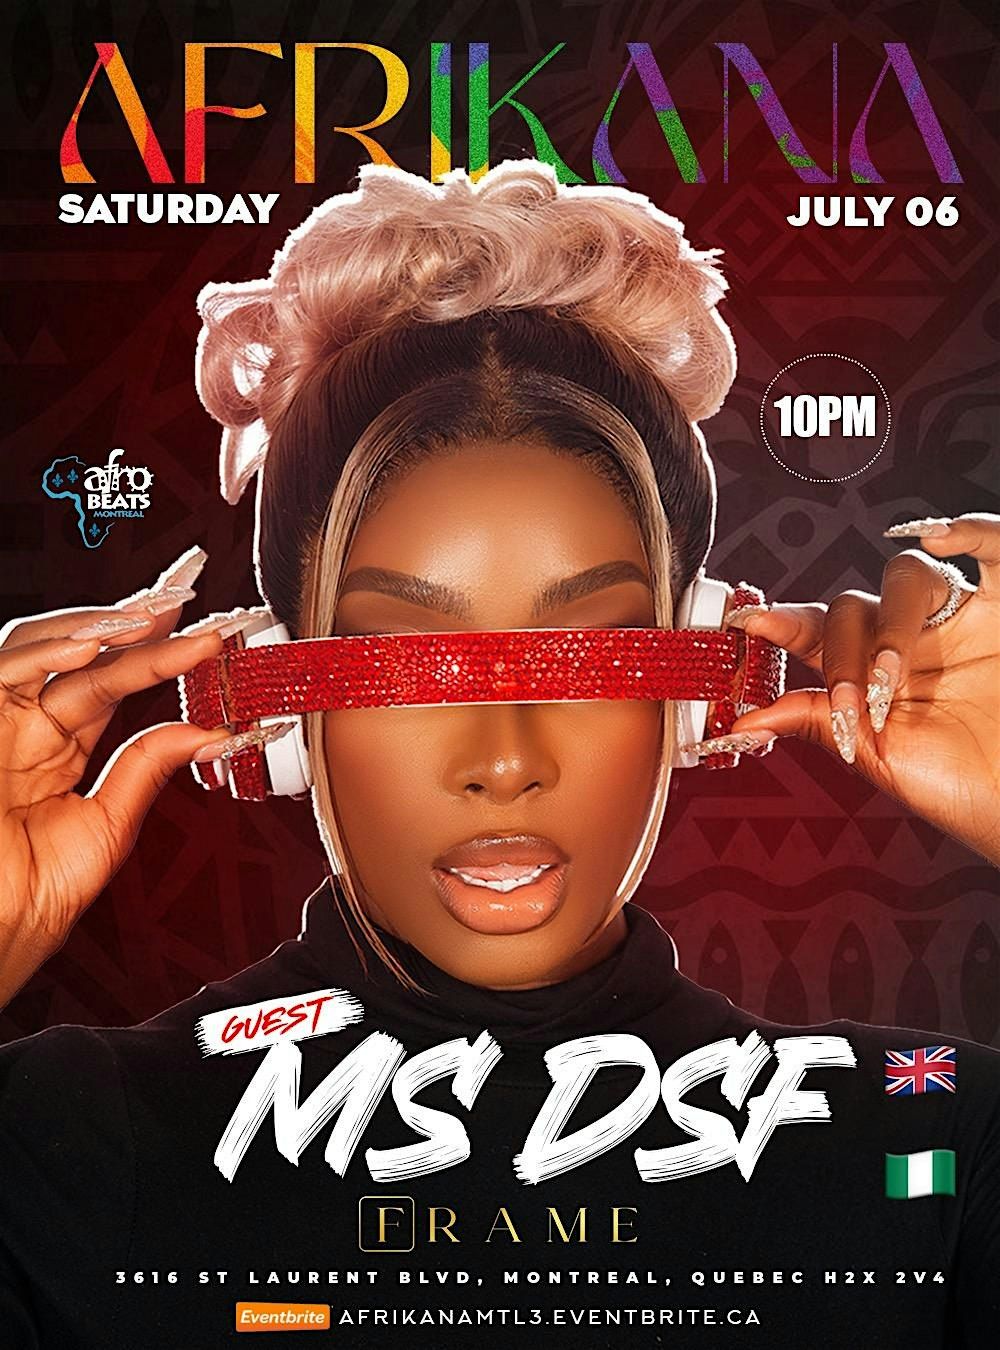 AfriKana - Guest DJ Ms DSF